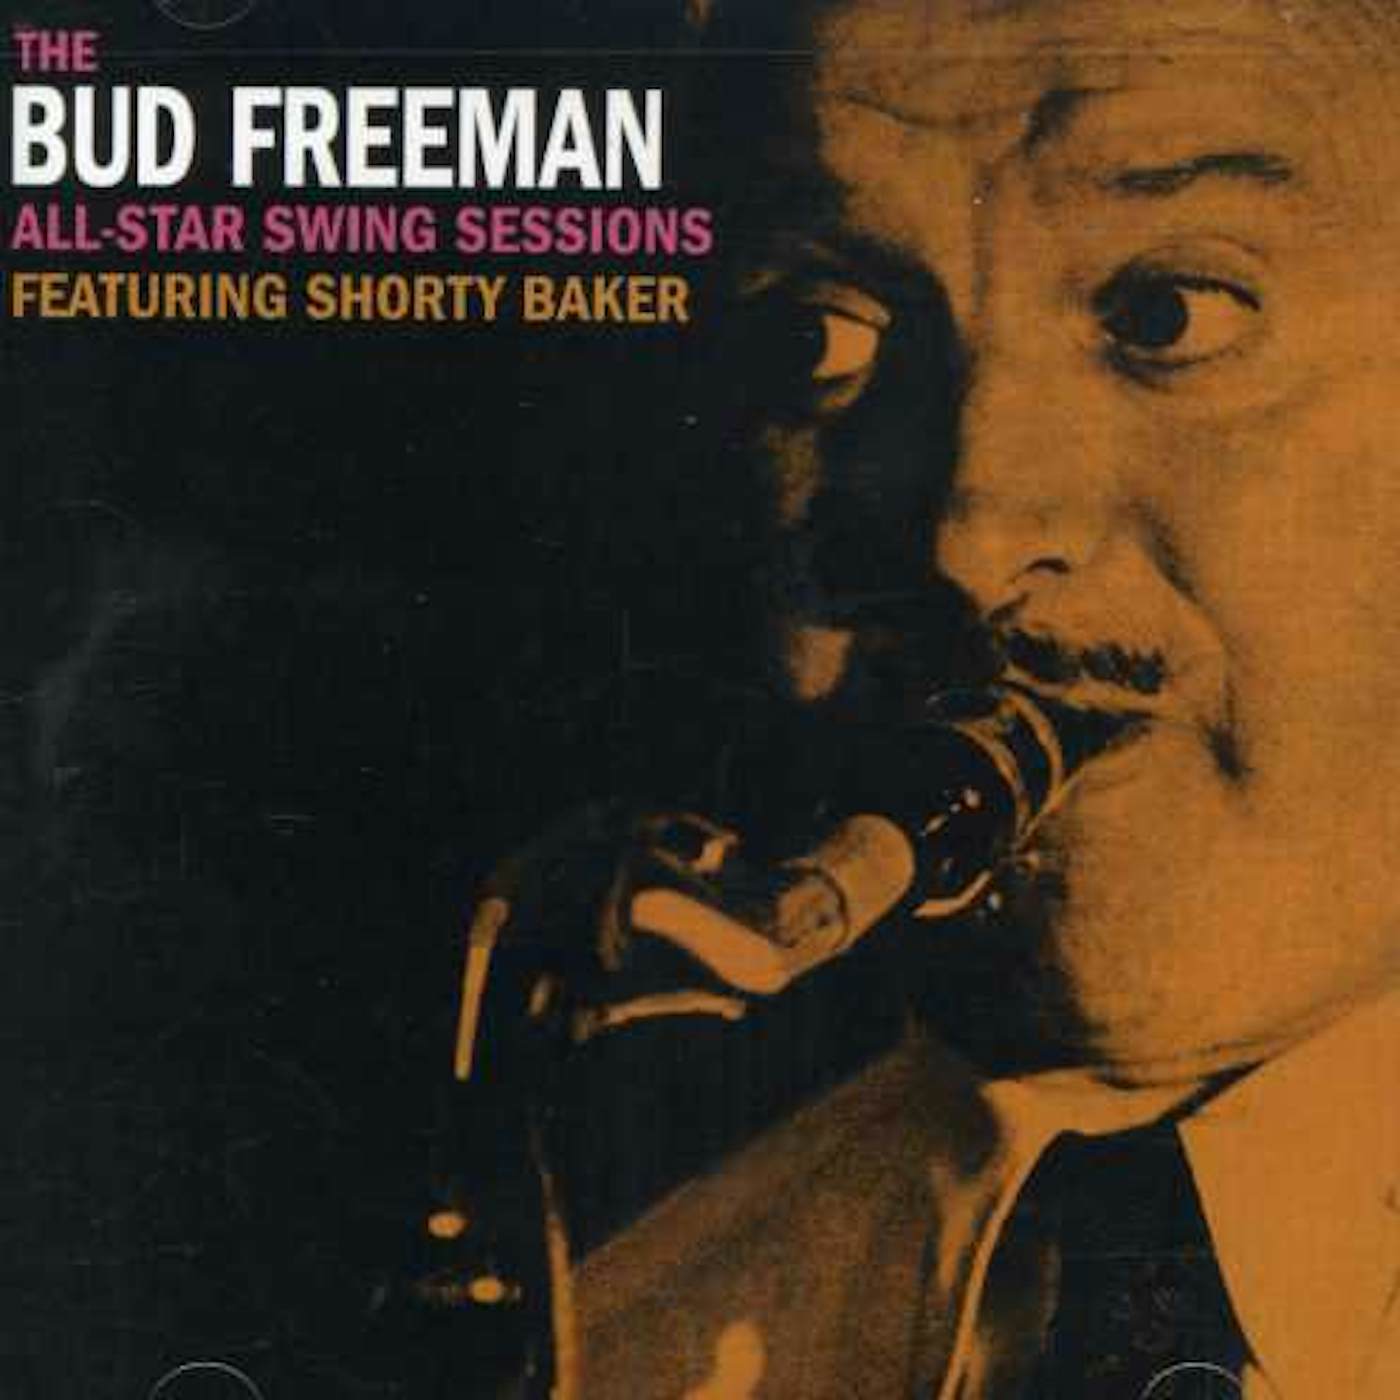 Bud Freeman ALL STAR SWING SESSIONS CD